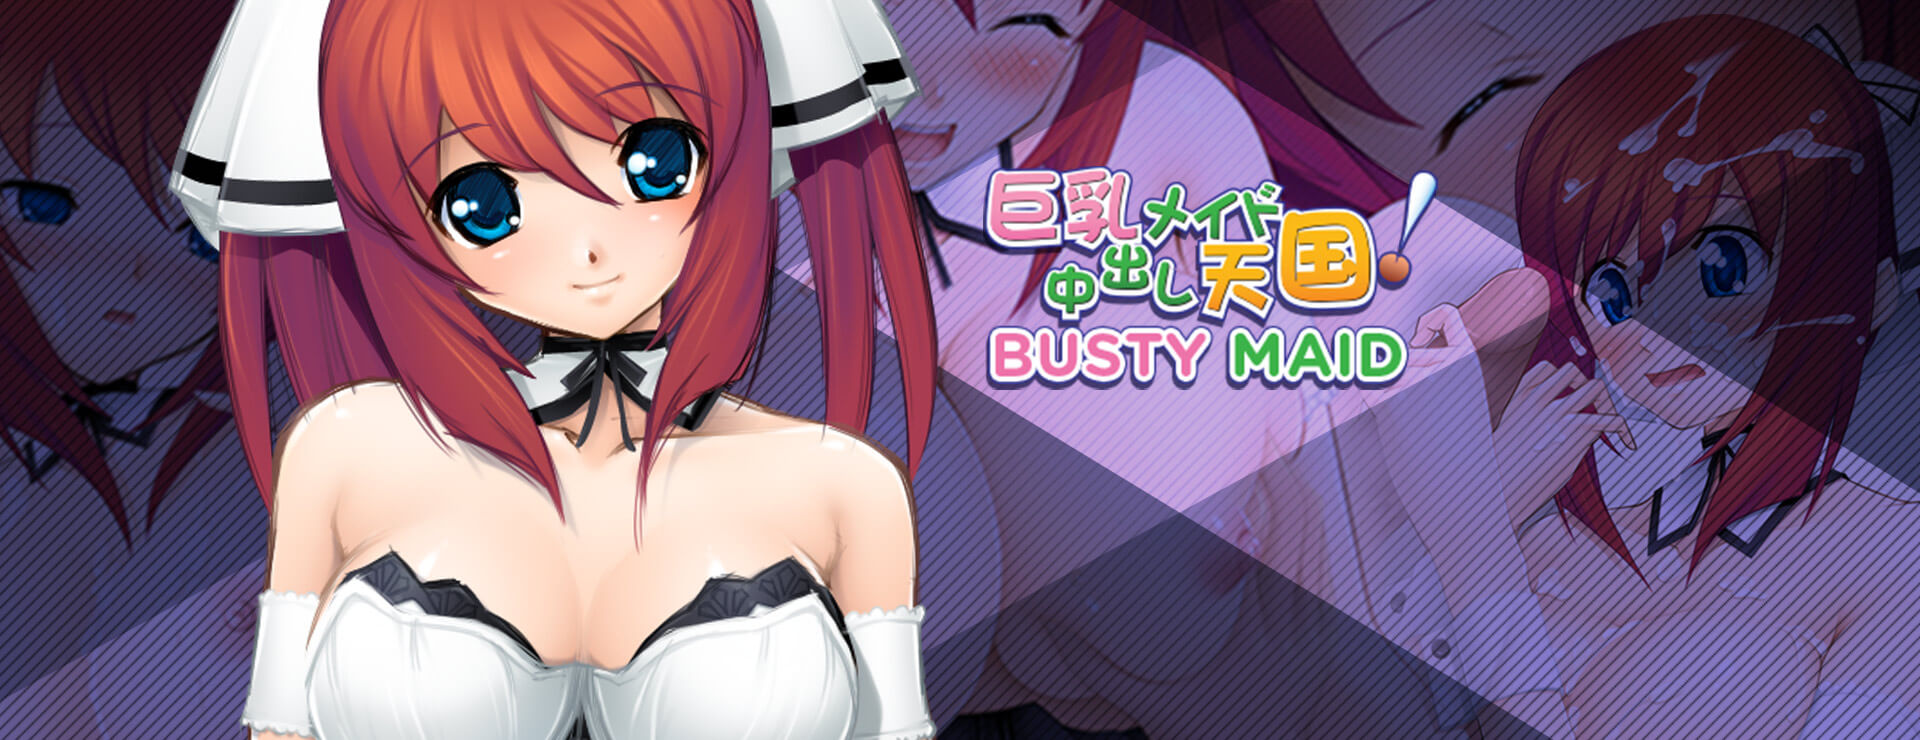 Busty Maid - 虚拟小说 遊戲